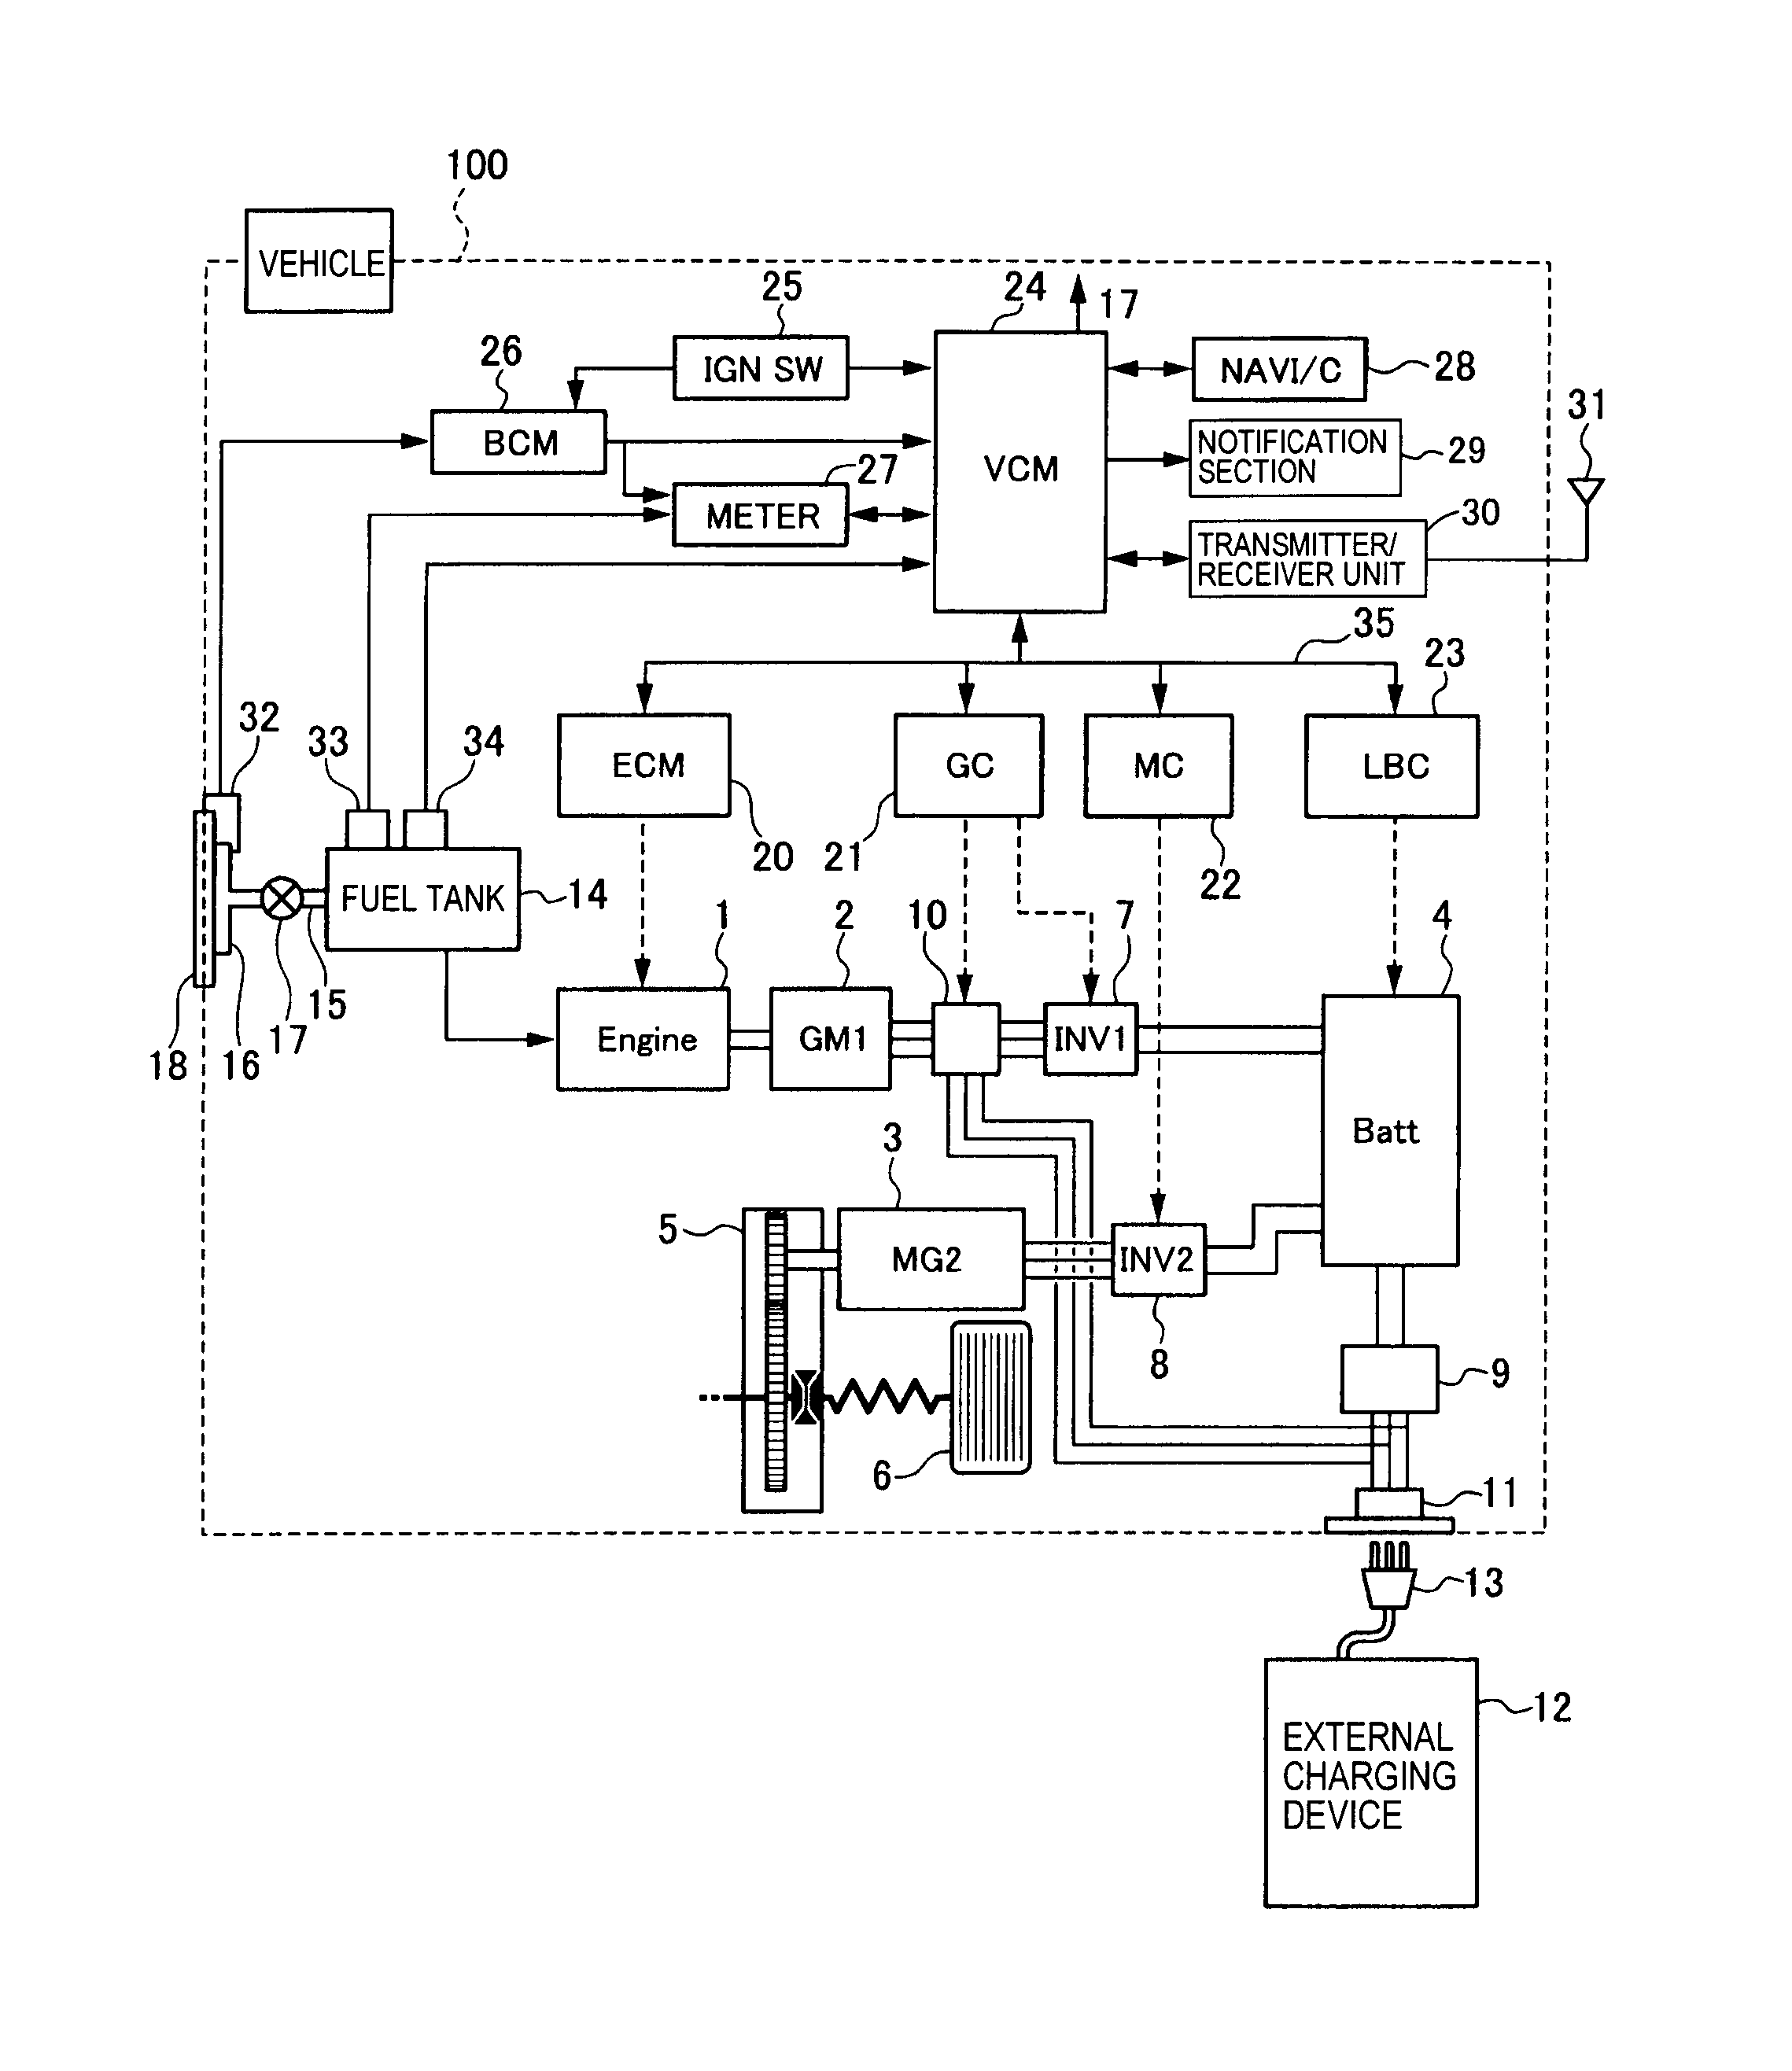 cfl 26w 2 pind wiring diagram